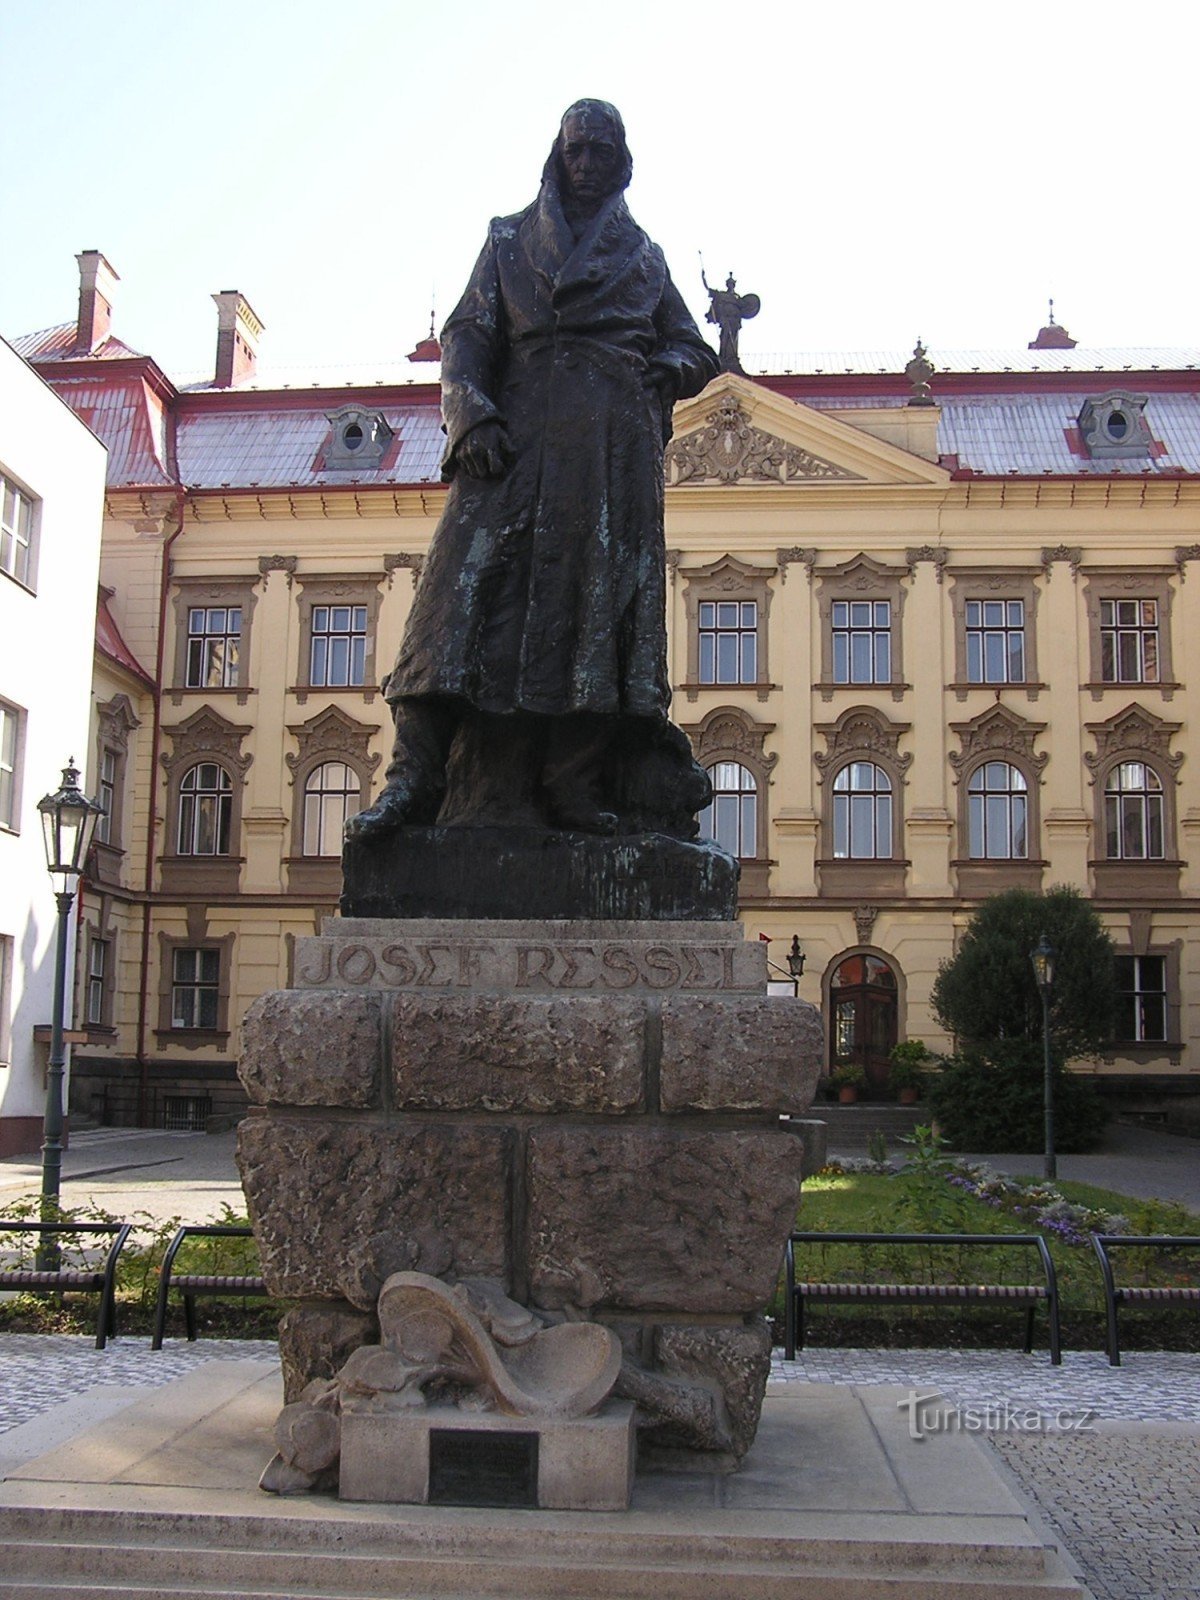 pomnik Josefa Ressela